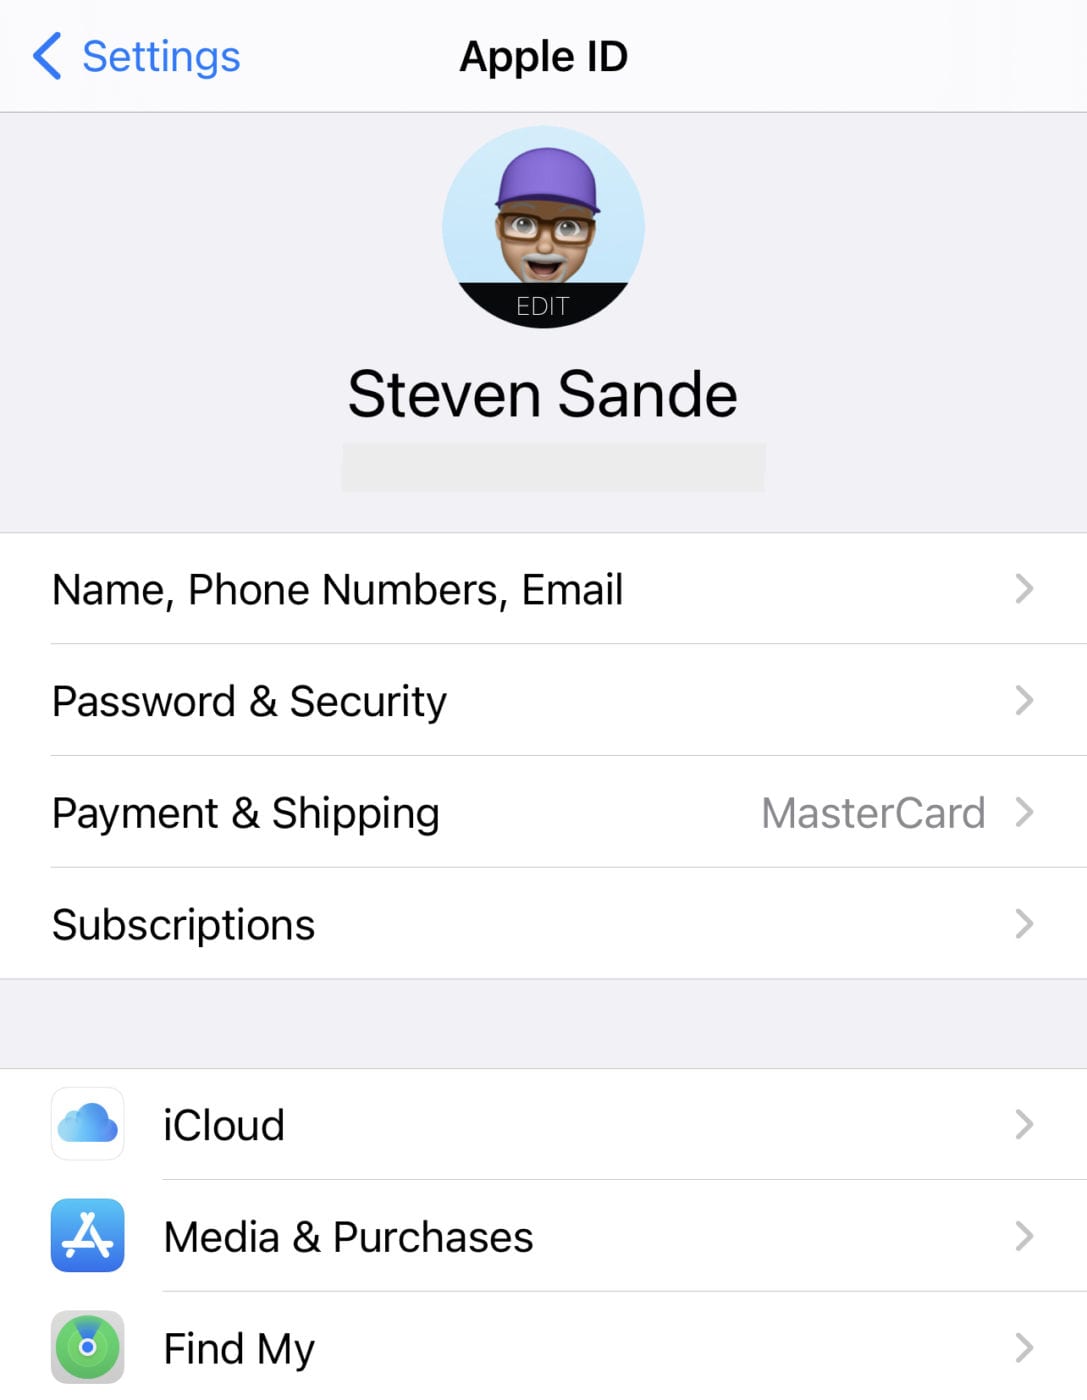 Apple ID information screen